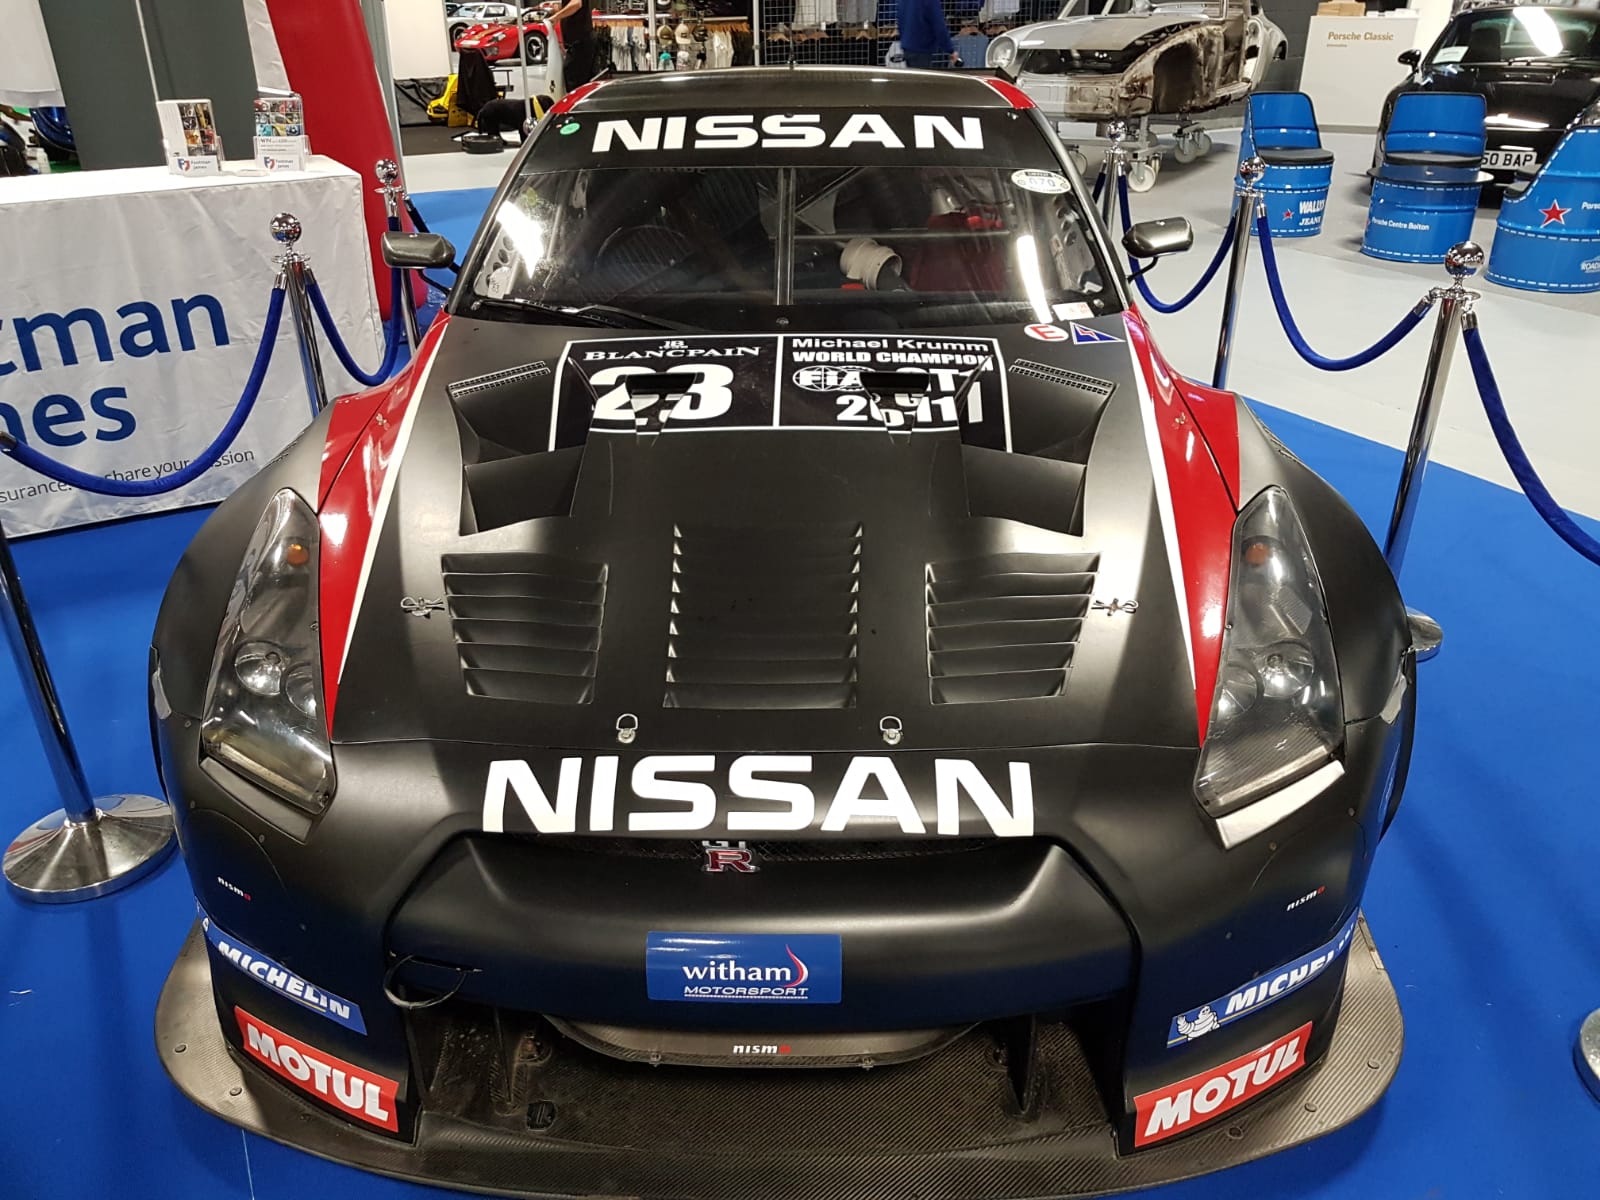 A super-rare Nissan GT1